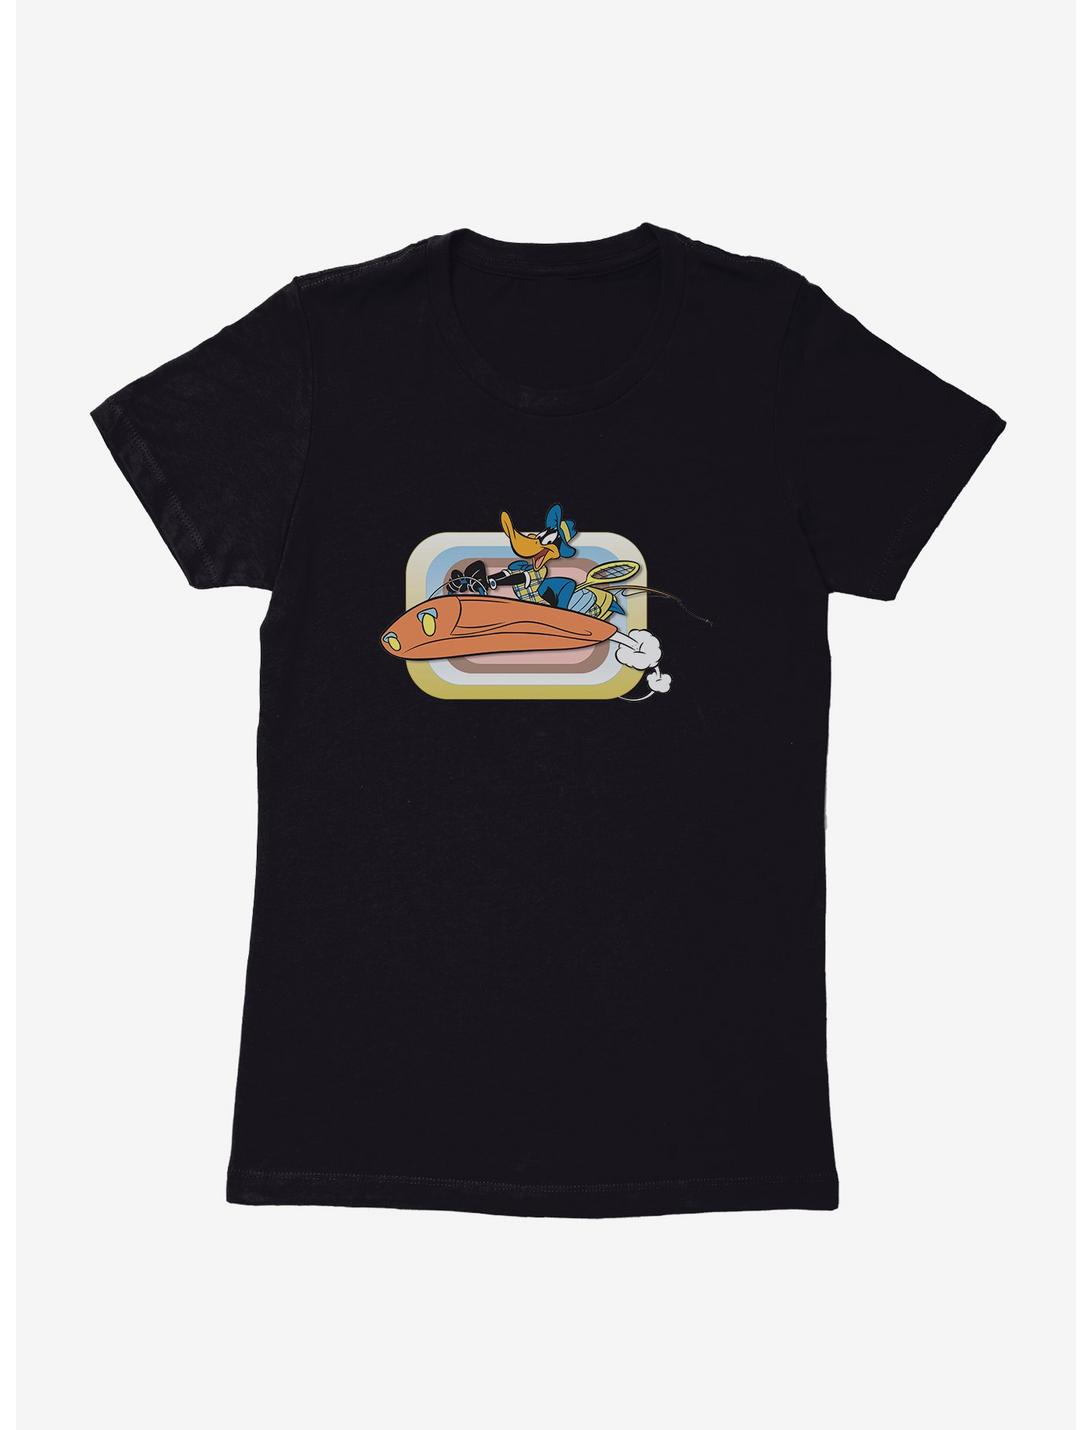 Looney Tunes Daffy Duck Flying High Womens T-Shirt, BLACK, hi-res